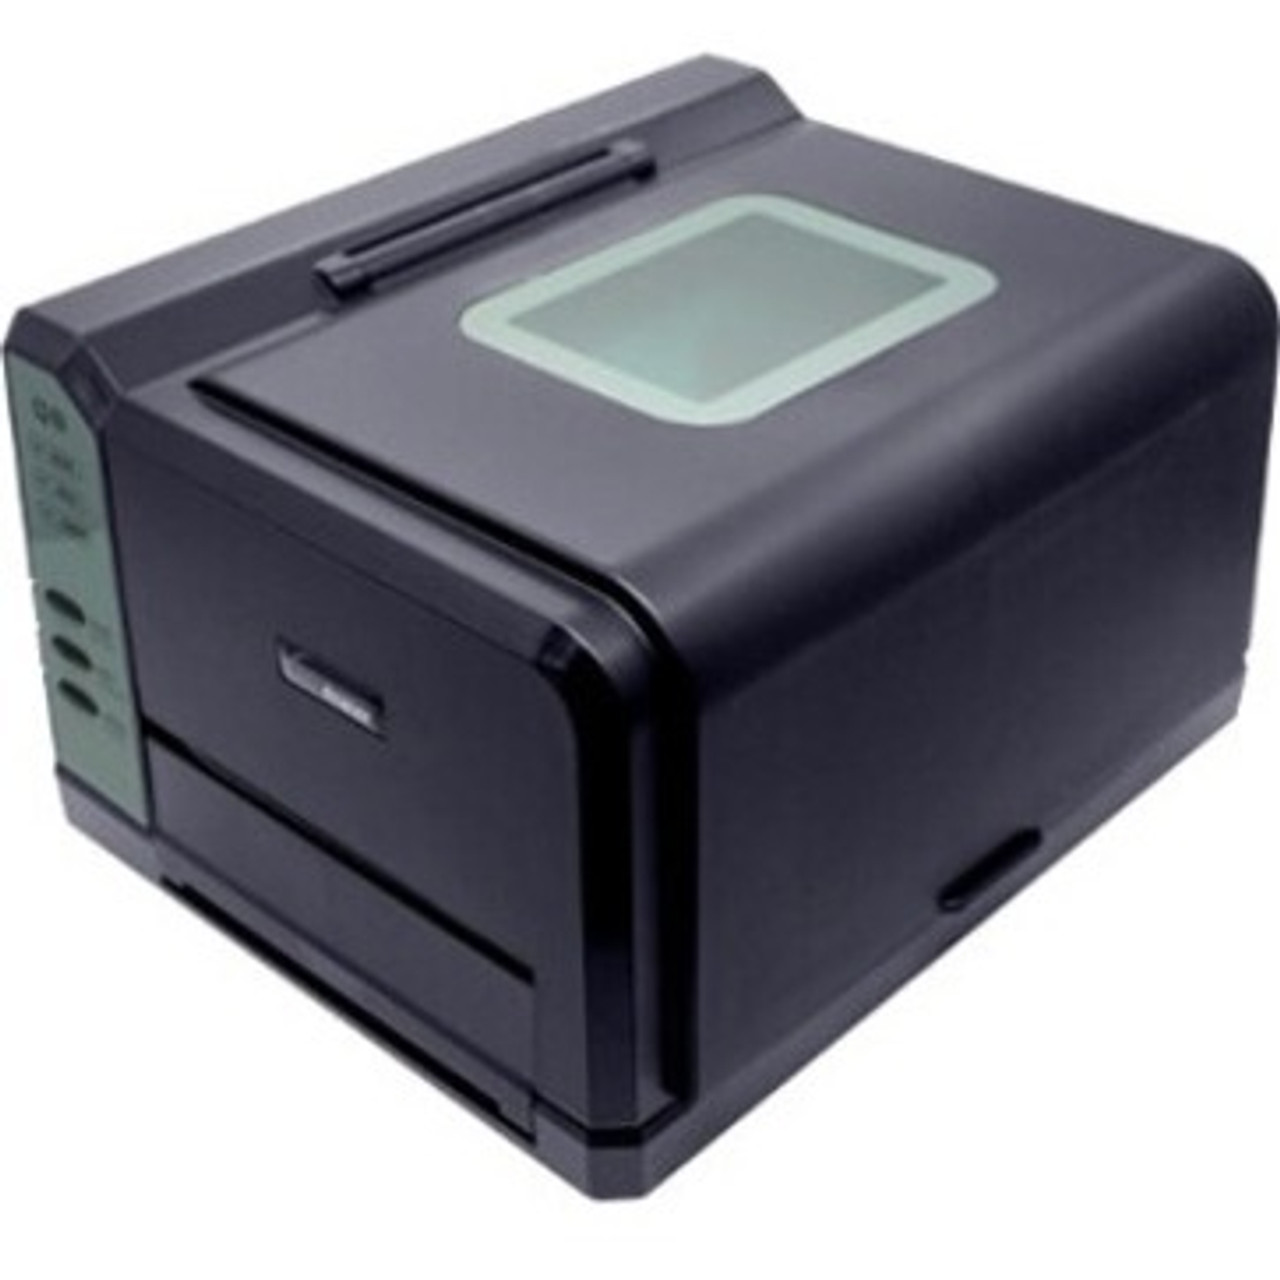 EC Line EC-Q8-Plus Desktop Direct Thermal/Thermal Transfer Printer - Monochrome - Label Print - USB - Serial - EC-Q8-PLUS